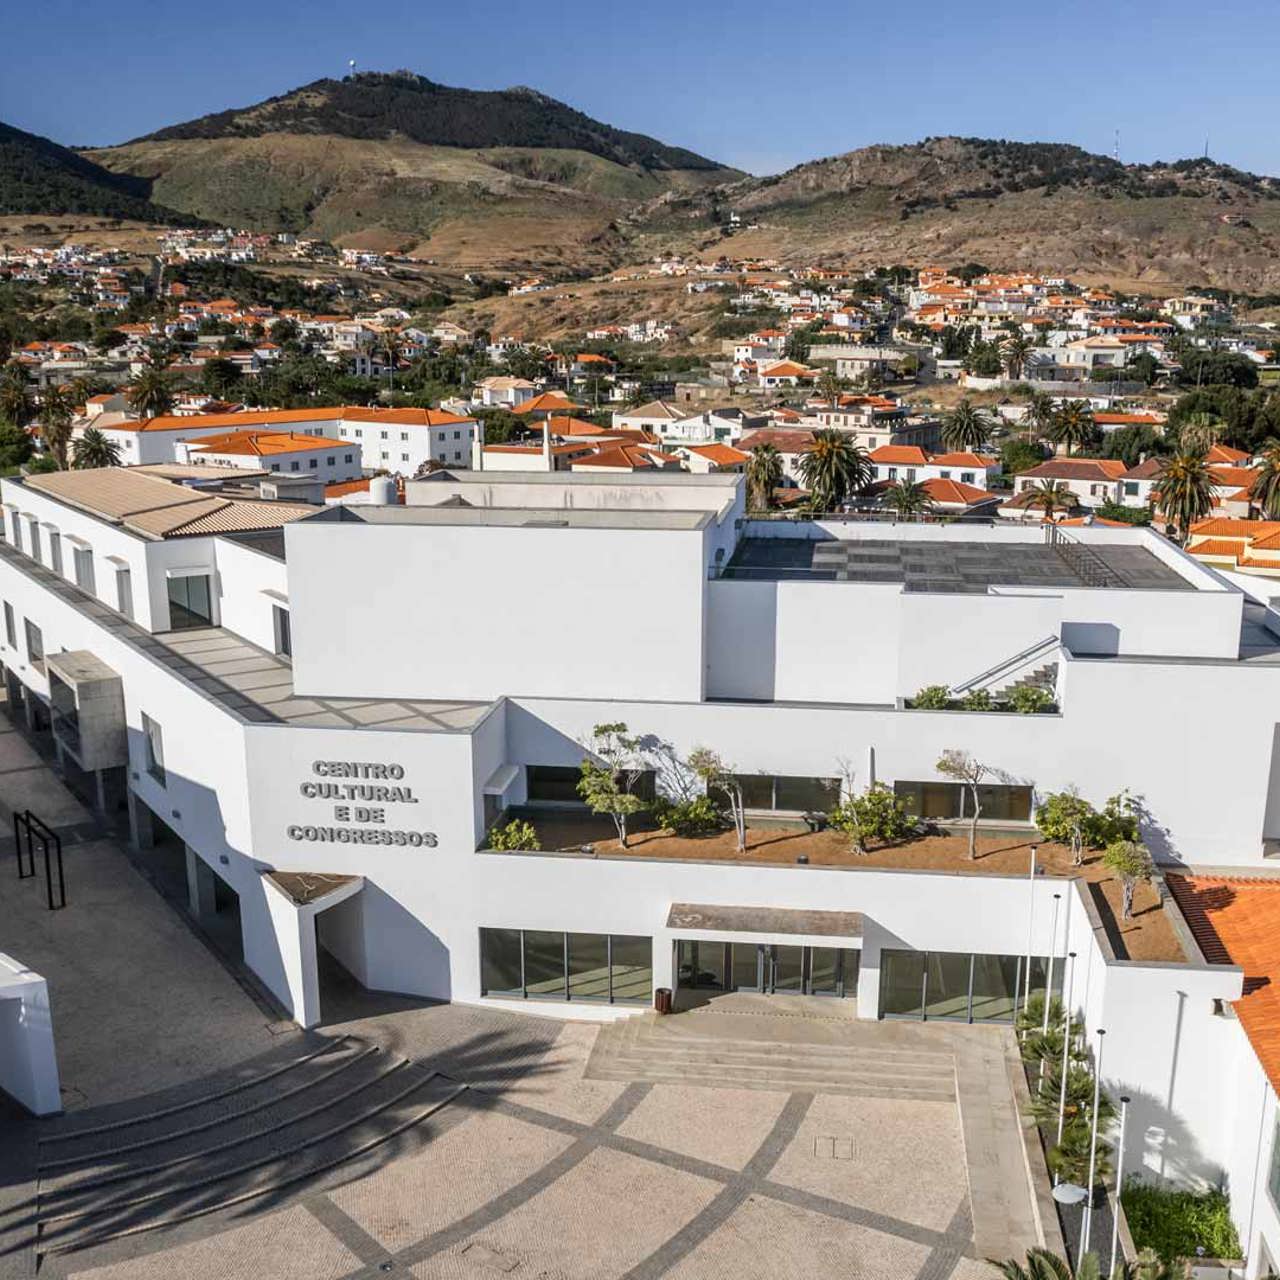 Centre culturel des congrès de Porto Santo 2